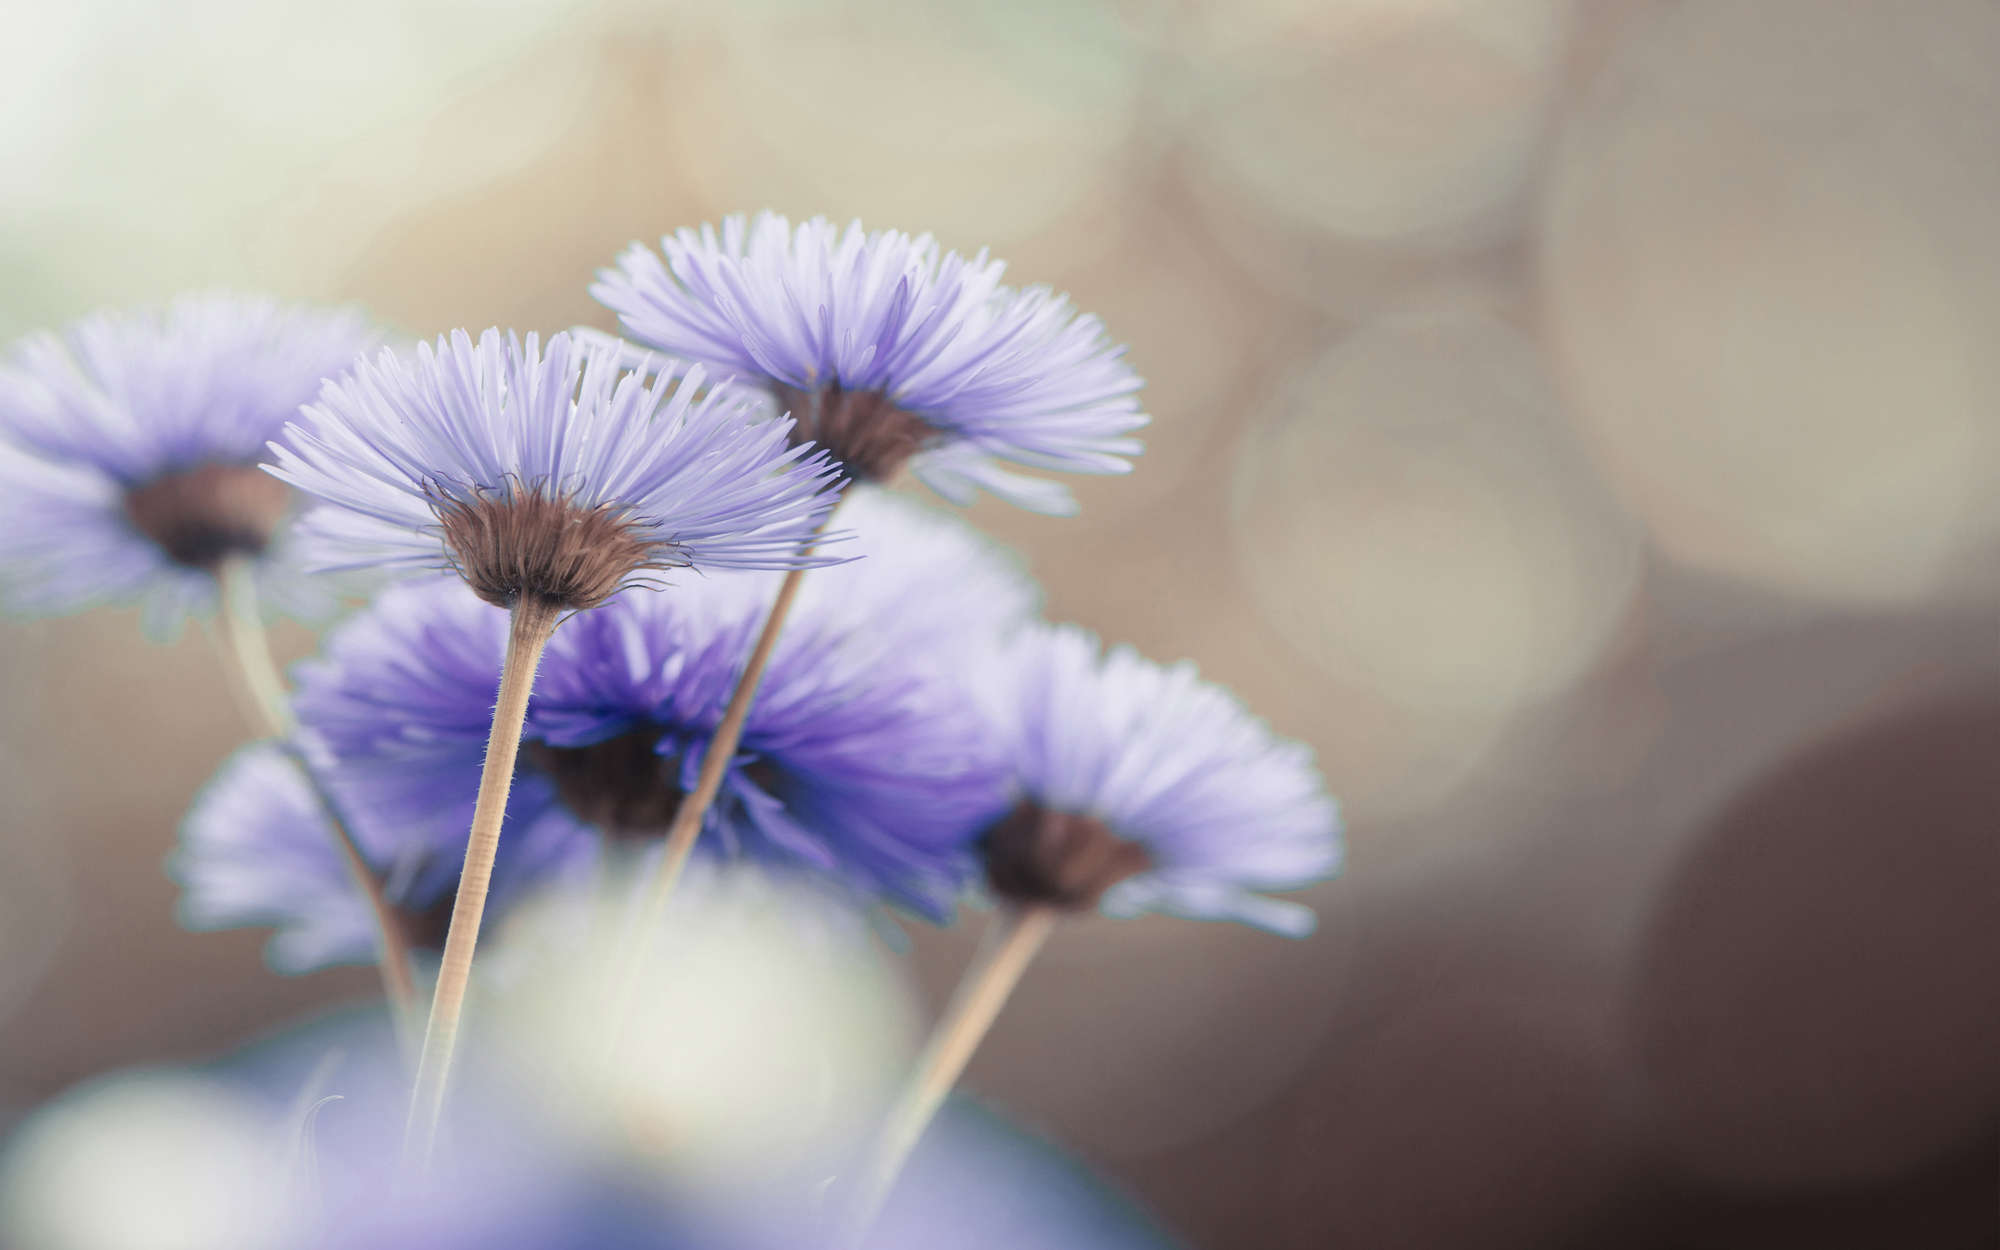             Fototapete Blumen in Violett – Perlmutt Glattvlies
        